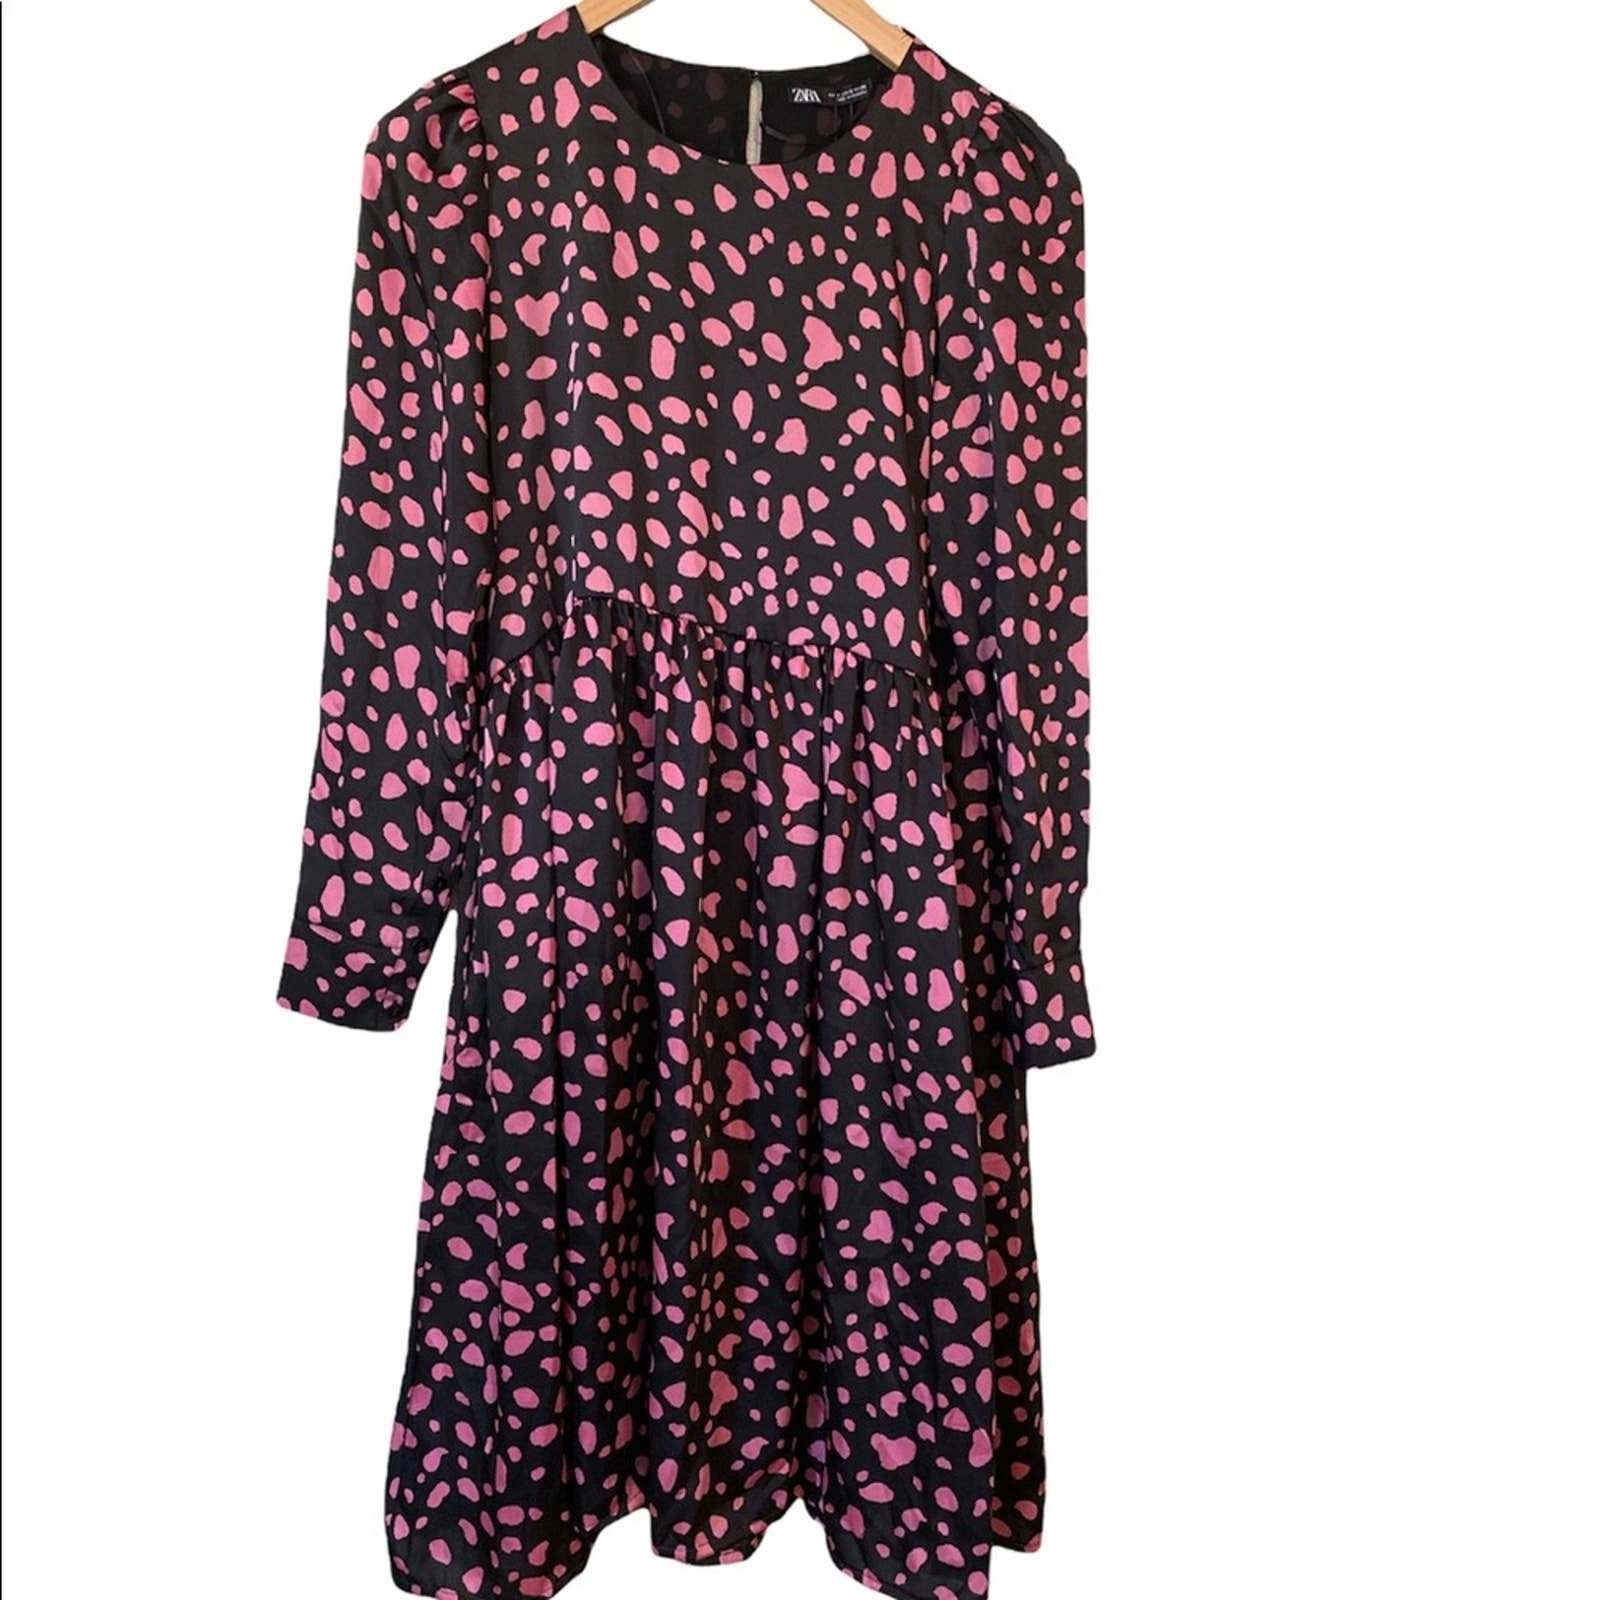 the Lowest price NWT Zara Knit Long sleeve Animal Print Dress small LlvlMStmW no tax